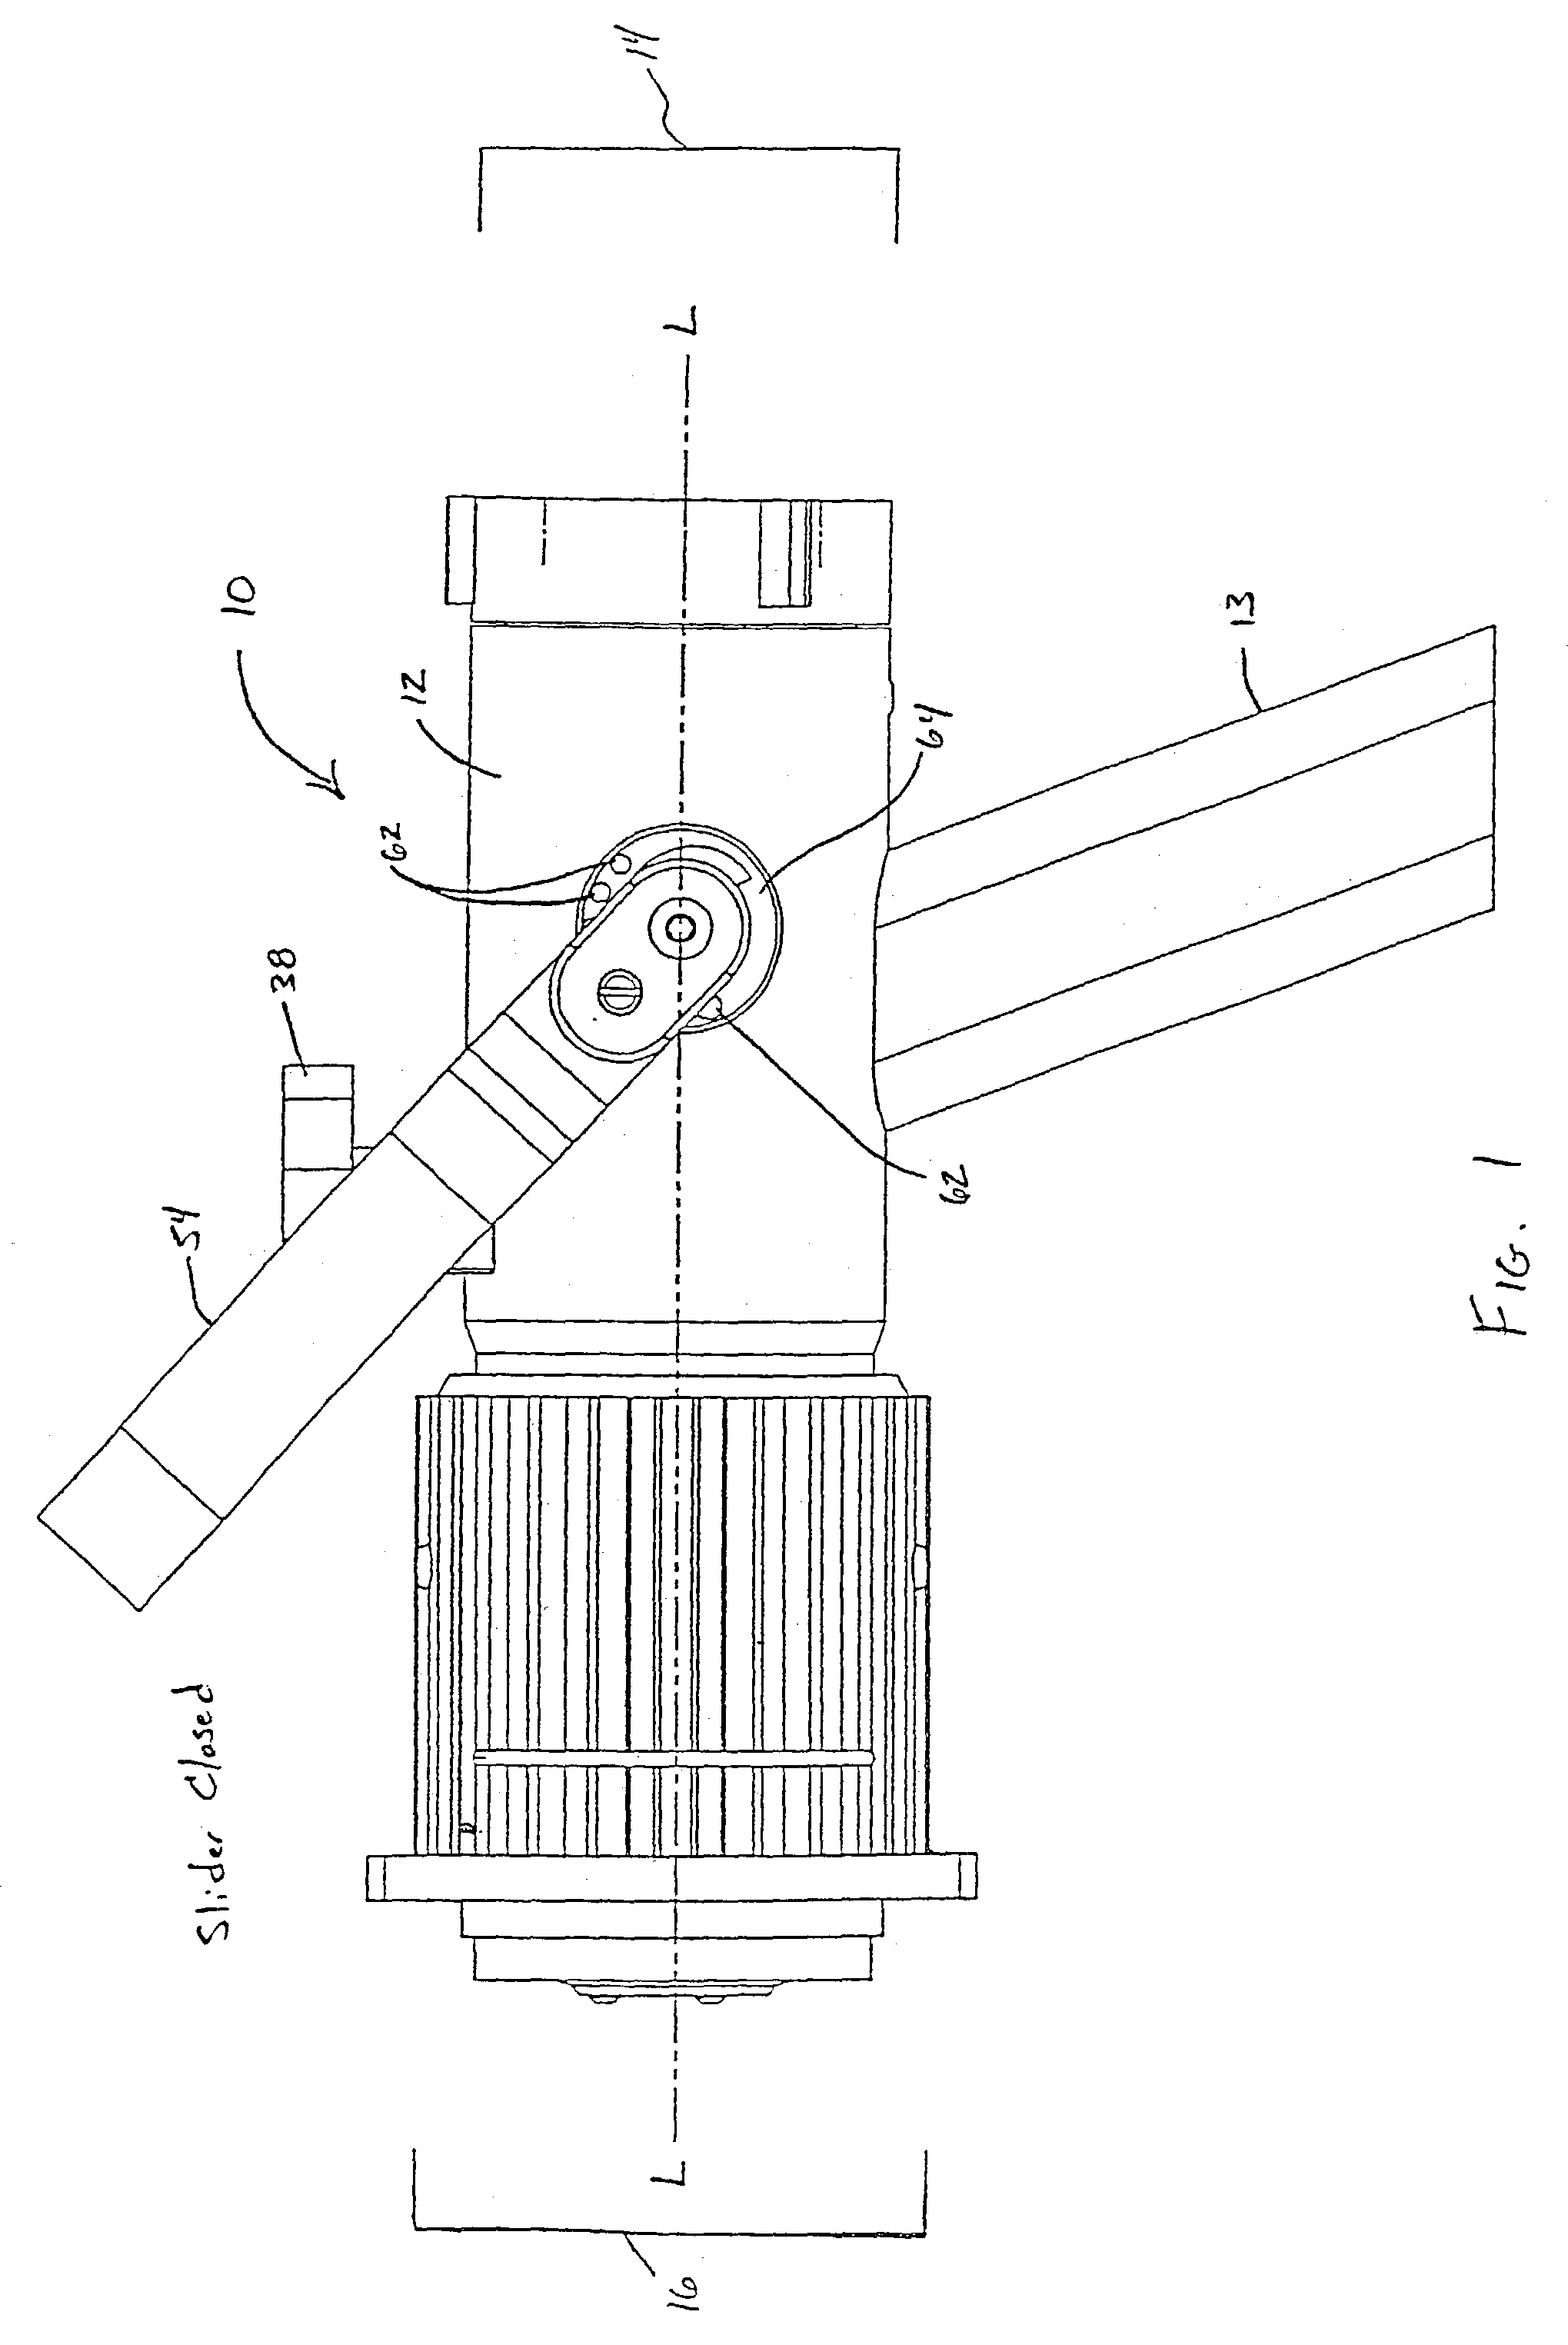 Hose nozzle apparatus and method